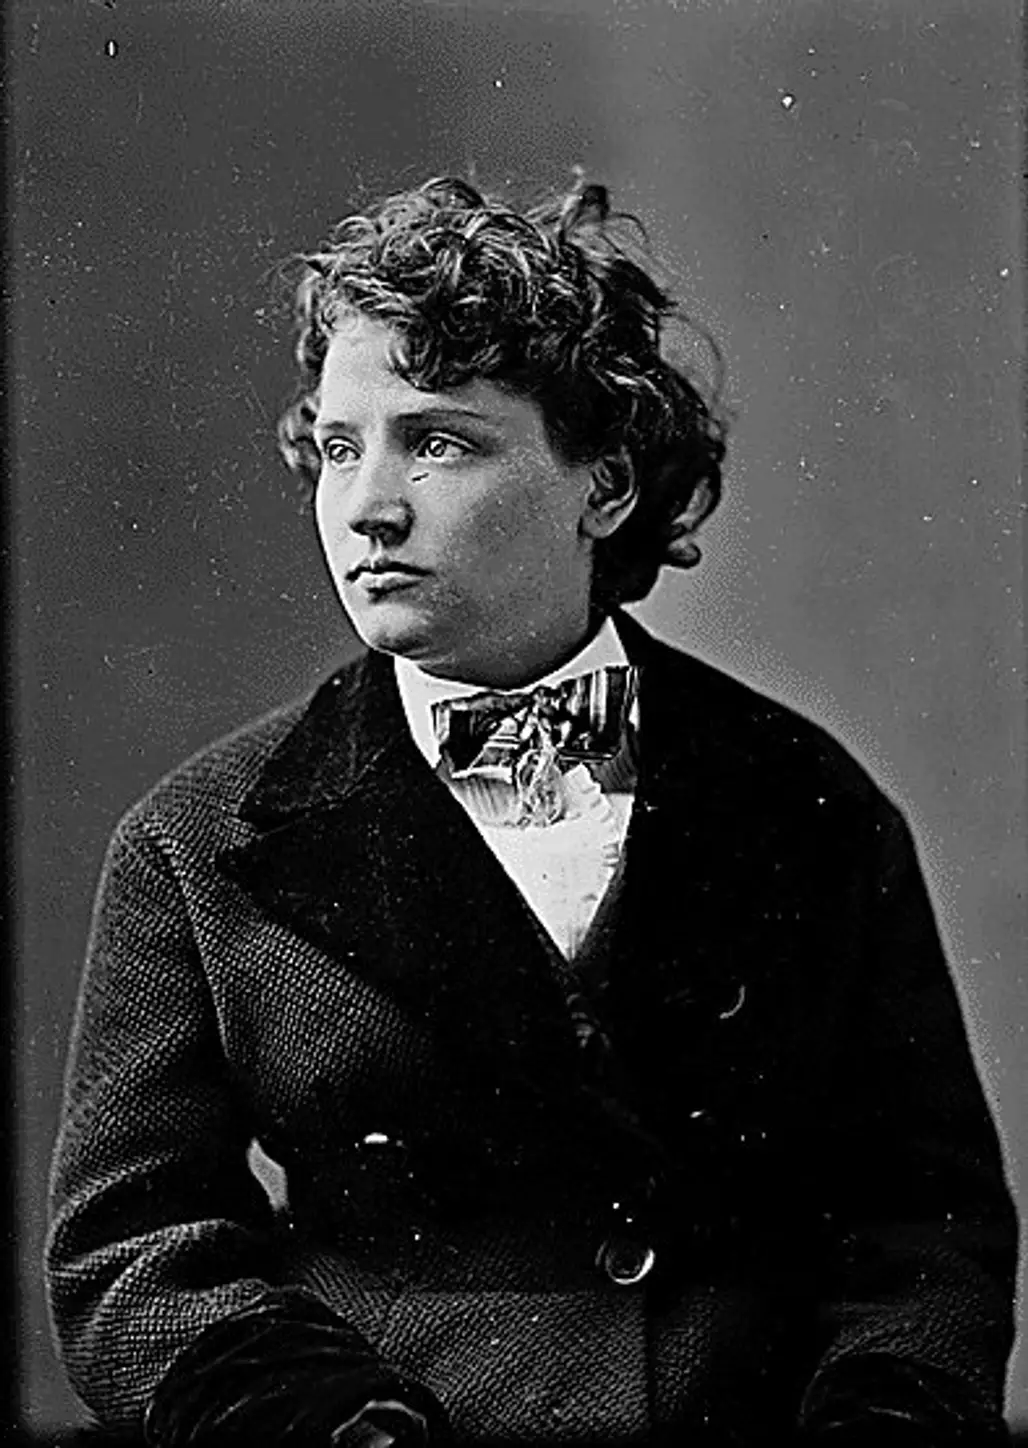 Victoria Woodhull, 1838 – 1927